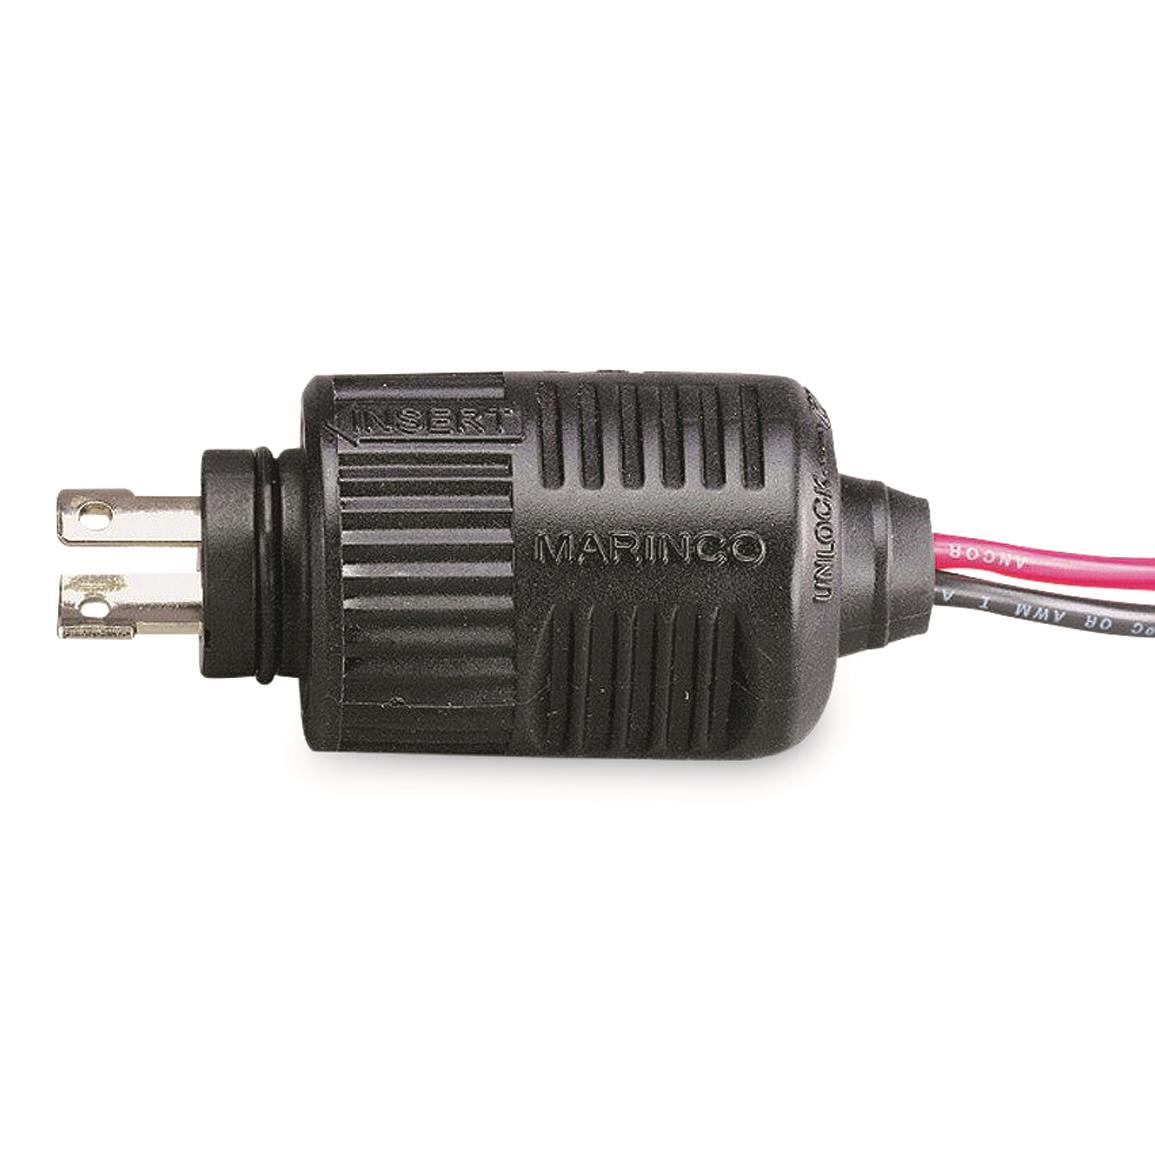 ConnectPro 2-wire Plug